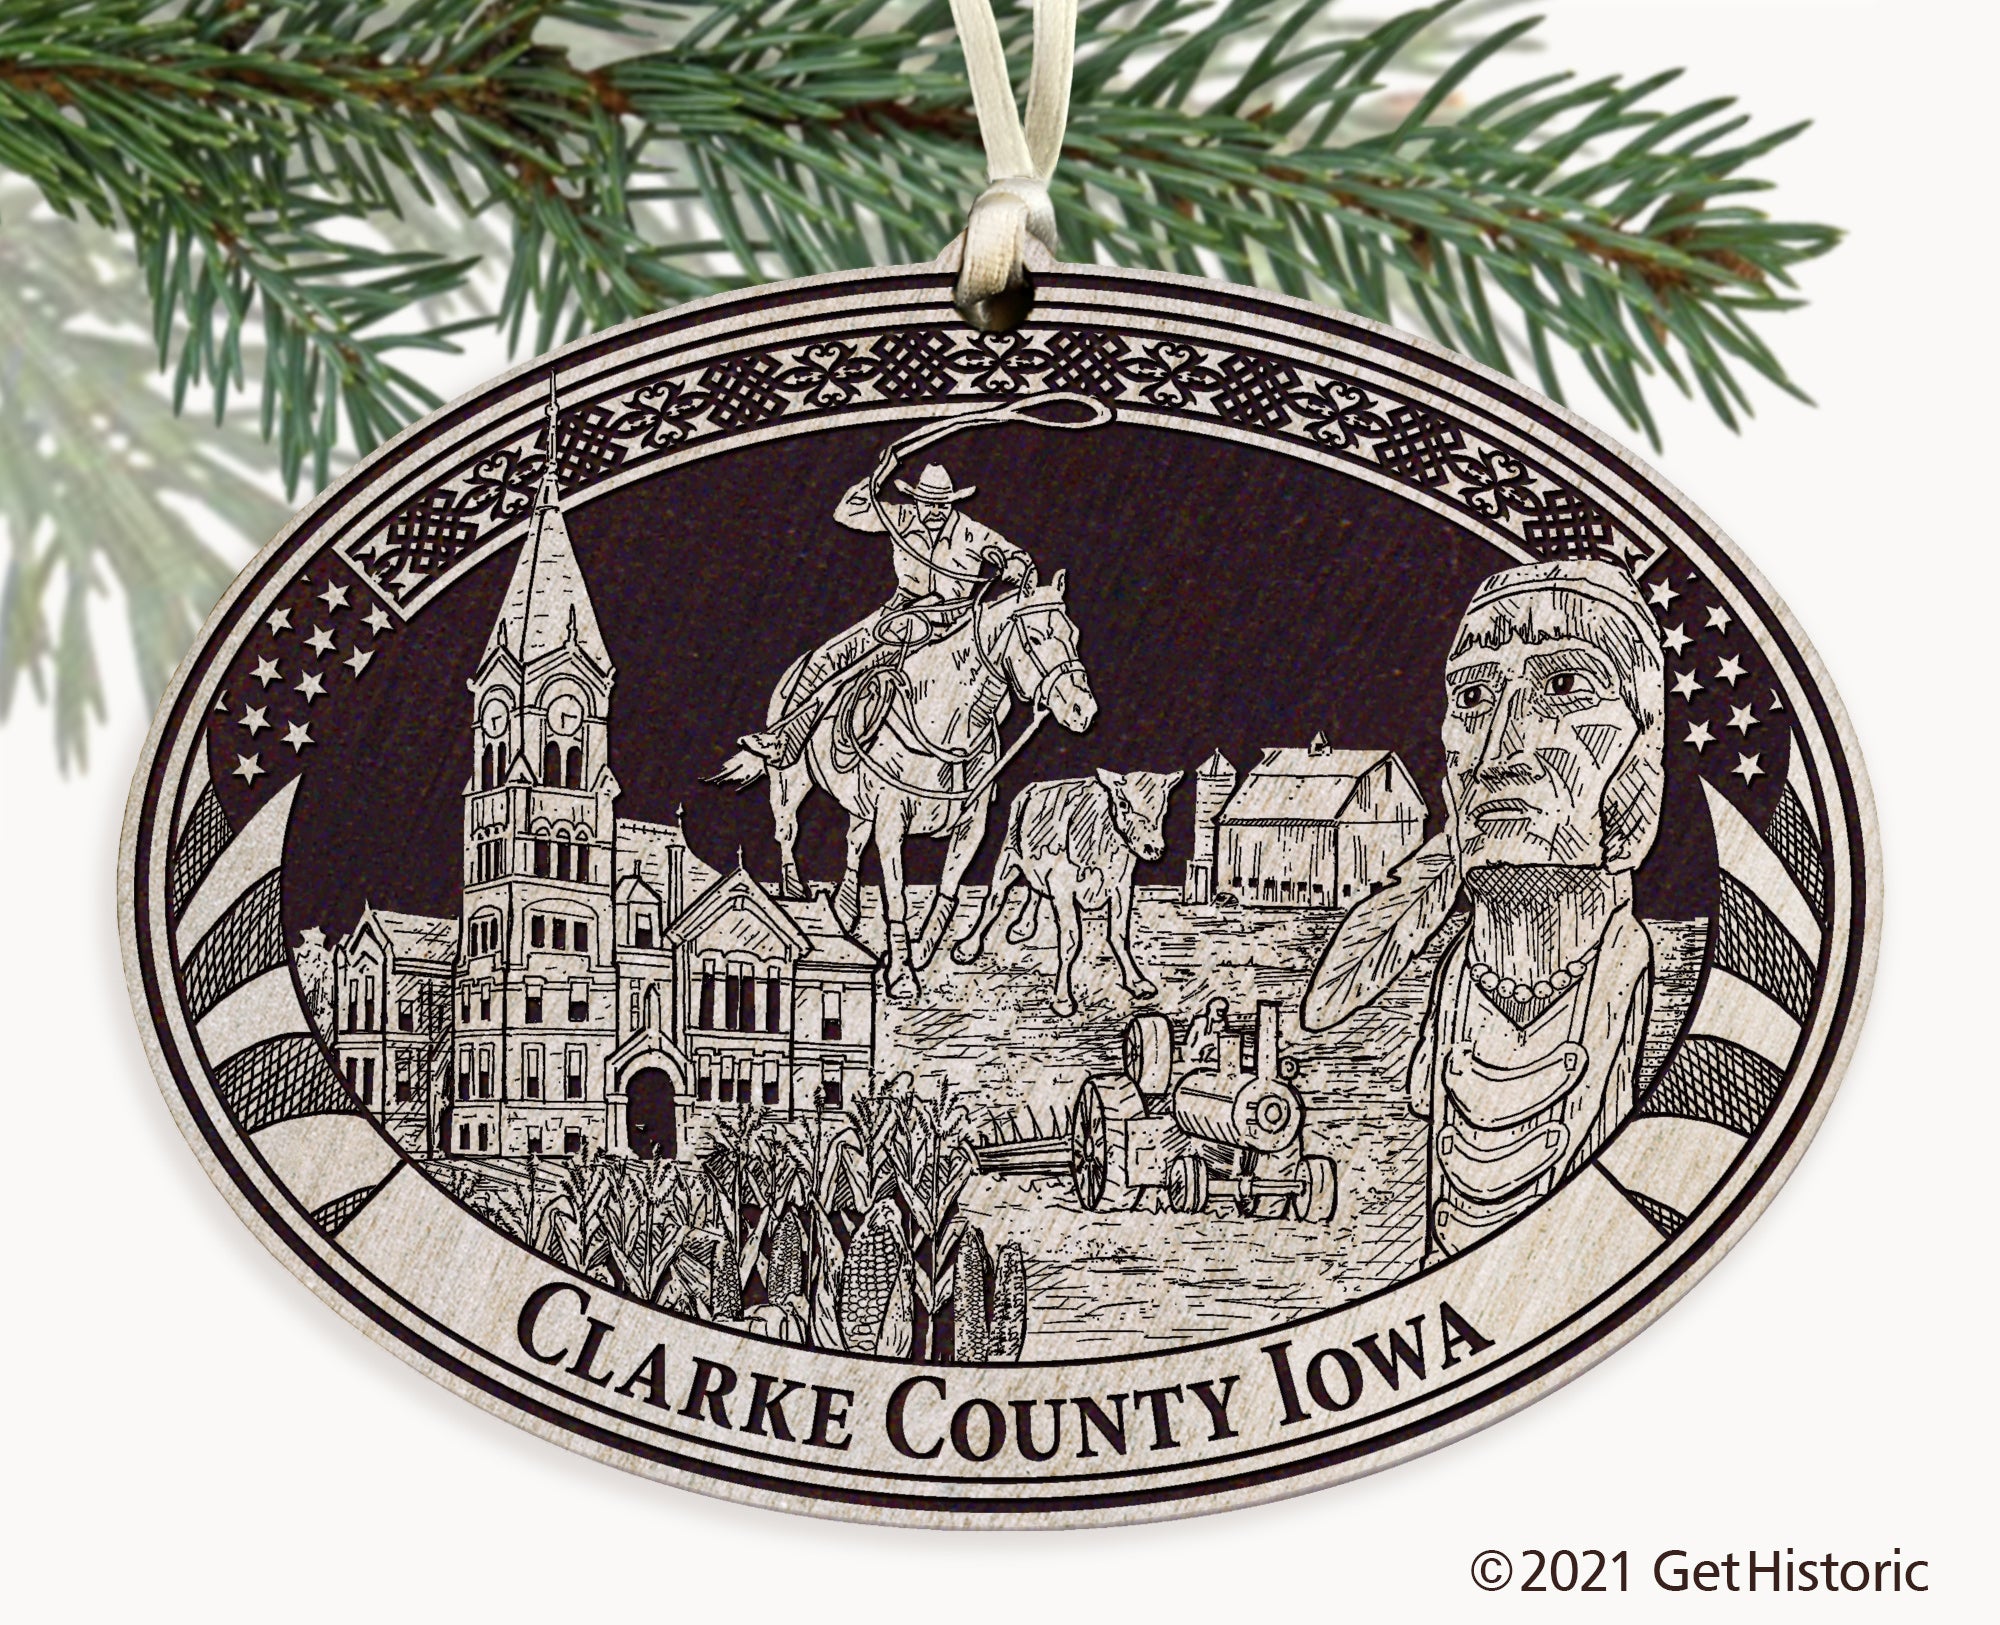 Clarke County Iowa Engraved Ornament